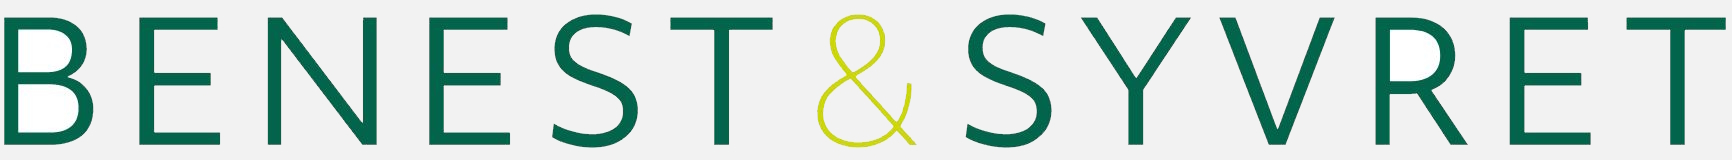 Benest & Syvret logo